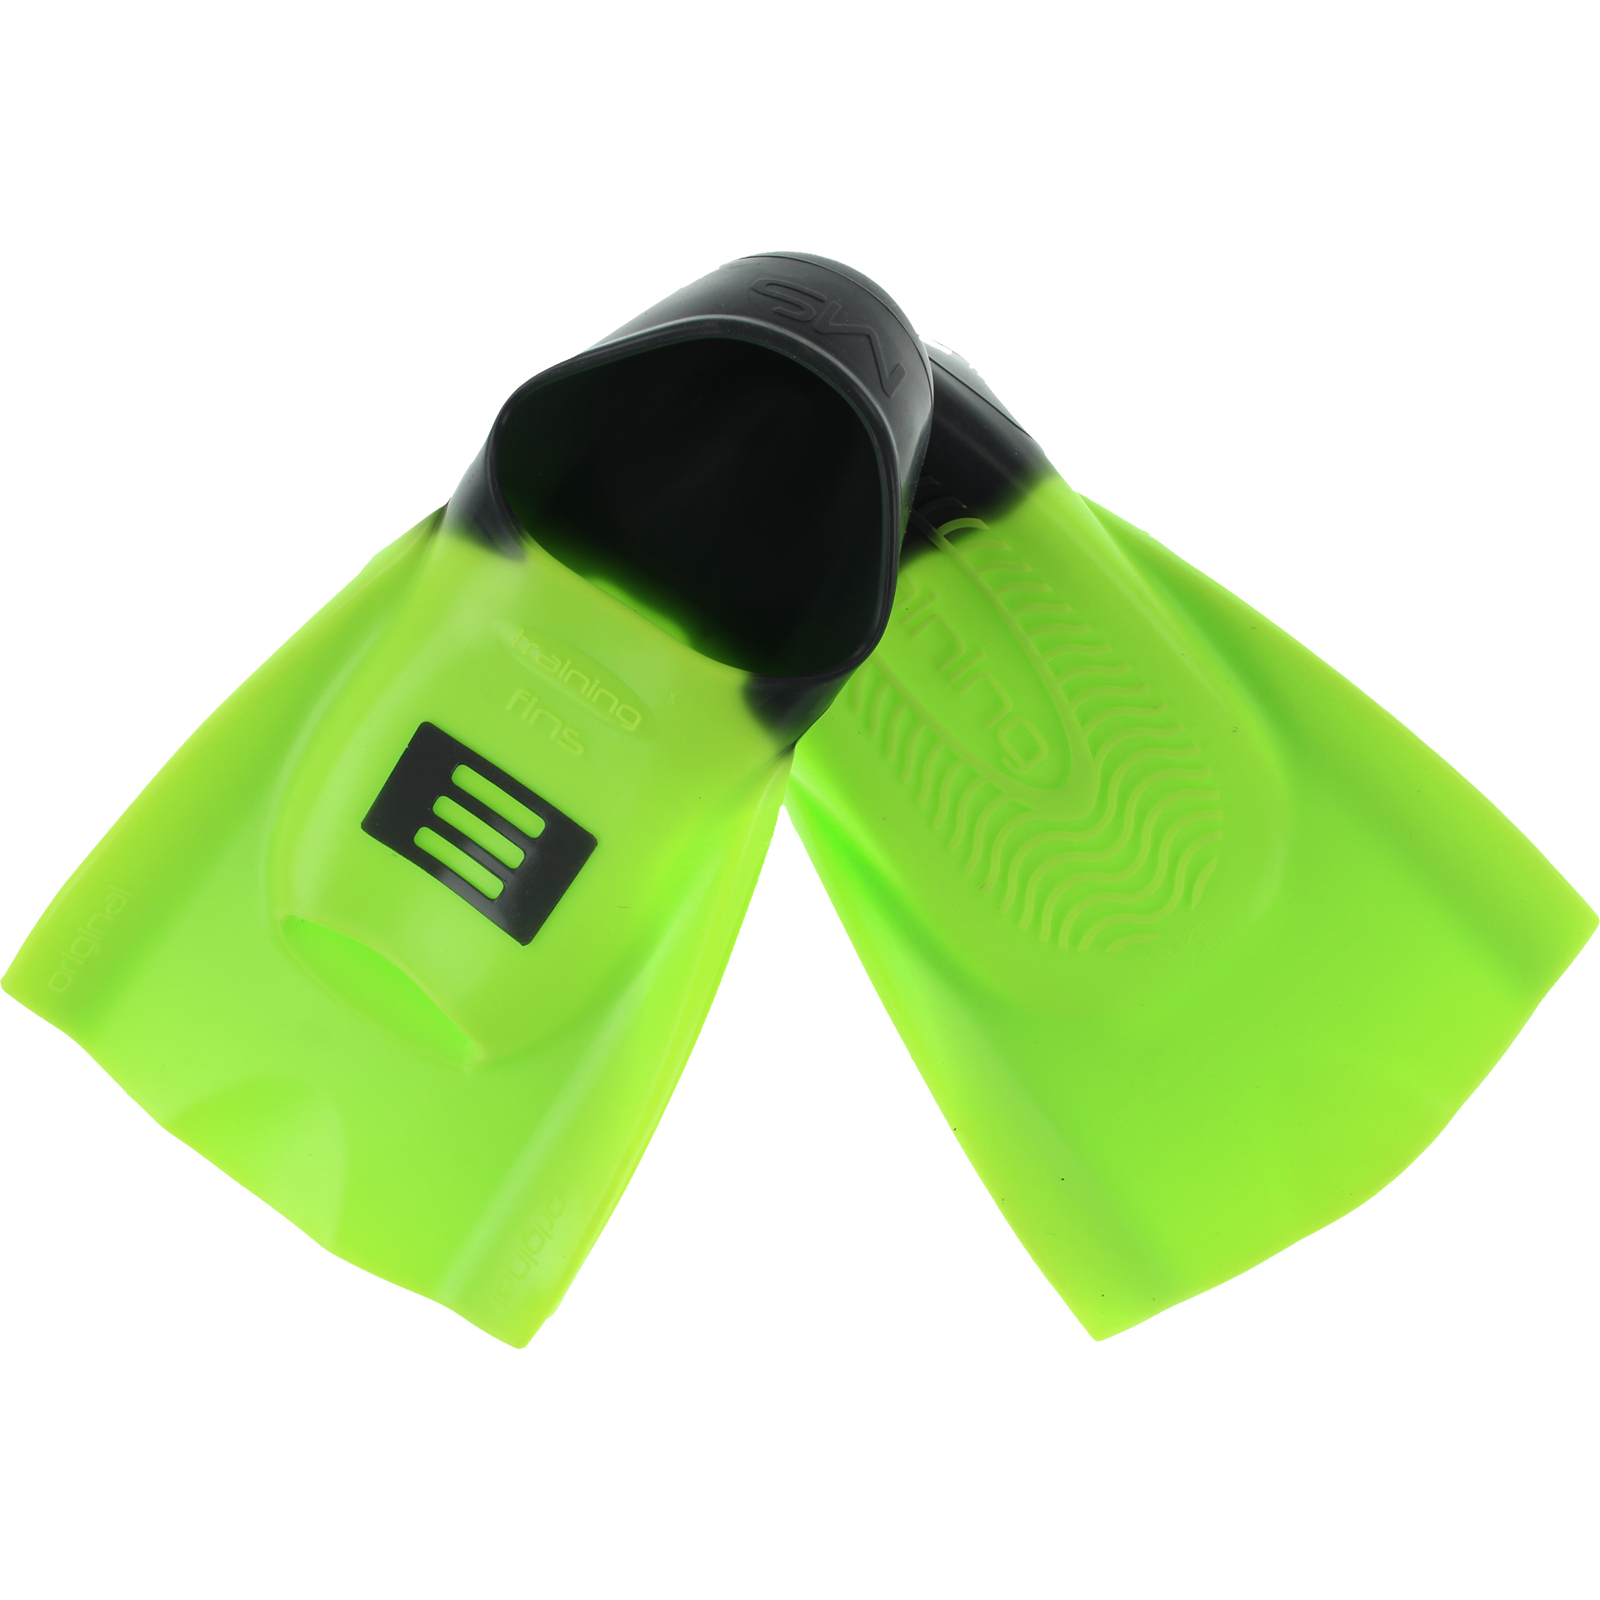 DMC Training Swim Fins - X-LARGE Green/Charcoal (Size 12+)